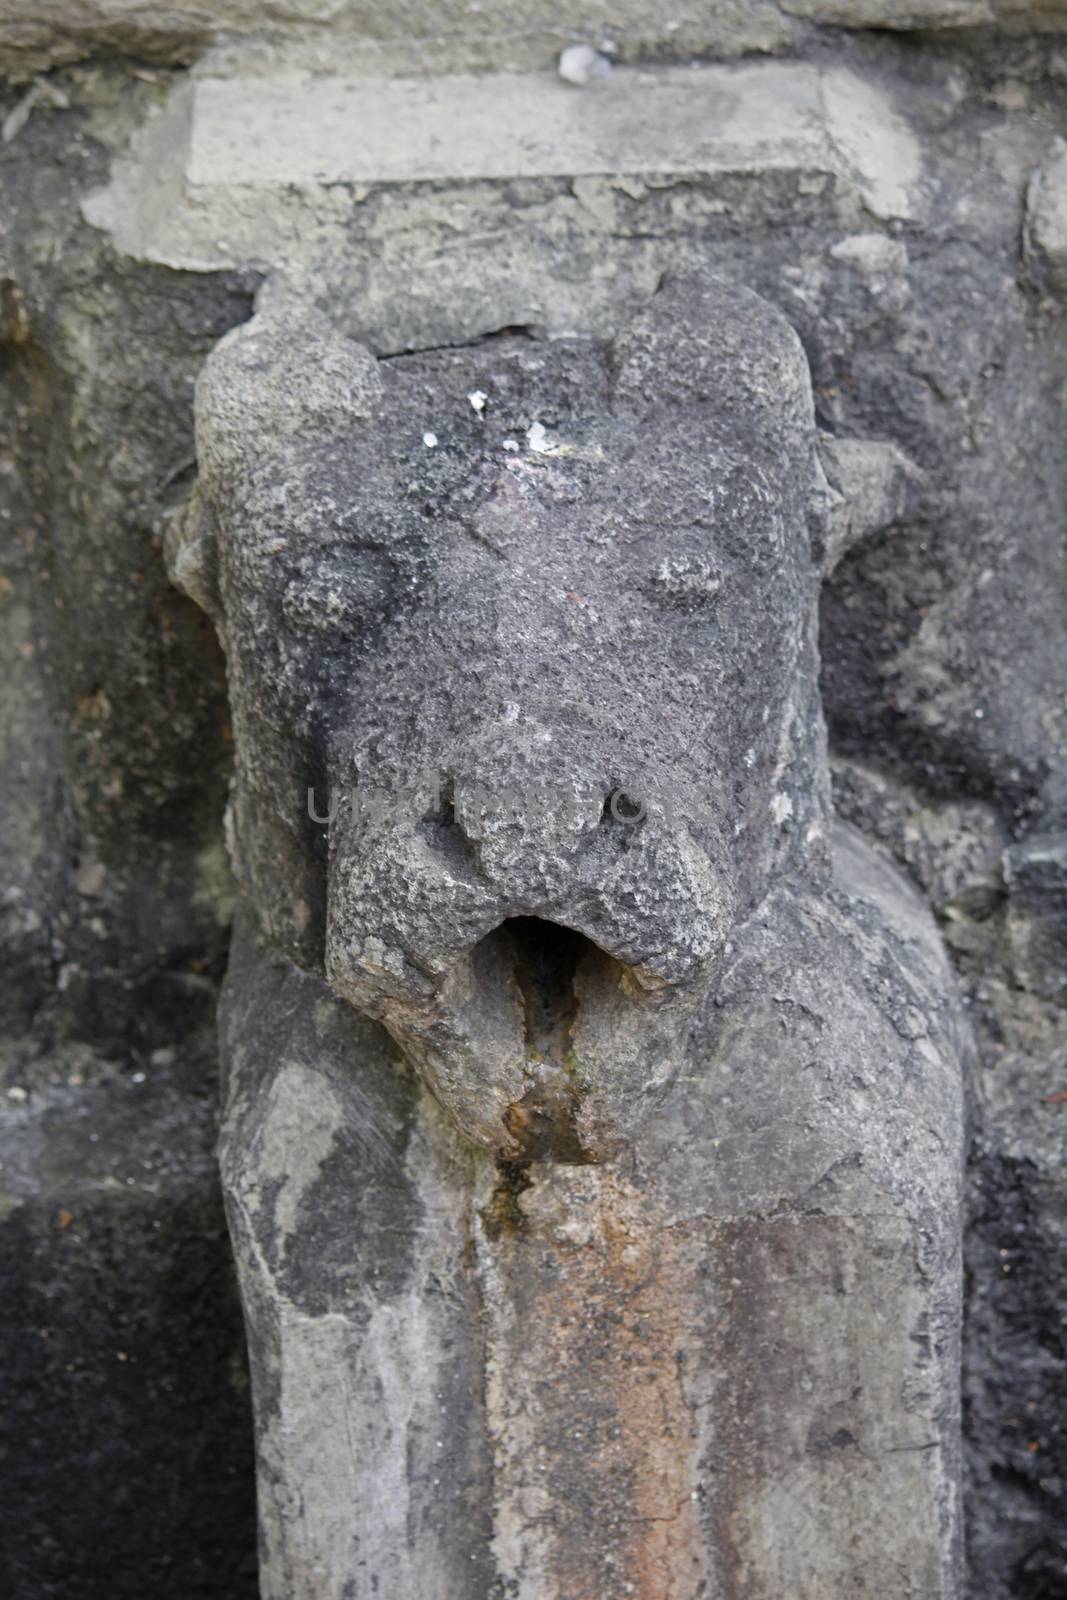 Gomukh, cow's mouth made of stone at Changwateshwar Temple near Saswad, Maharashtra, India